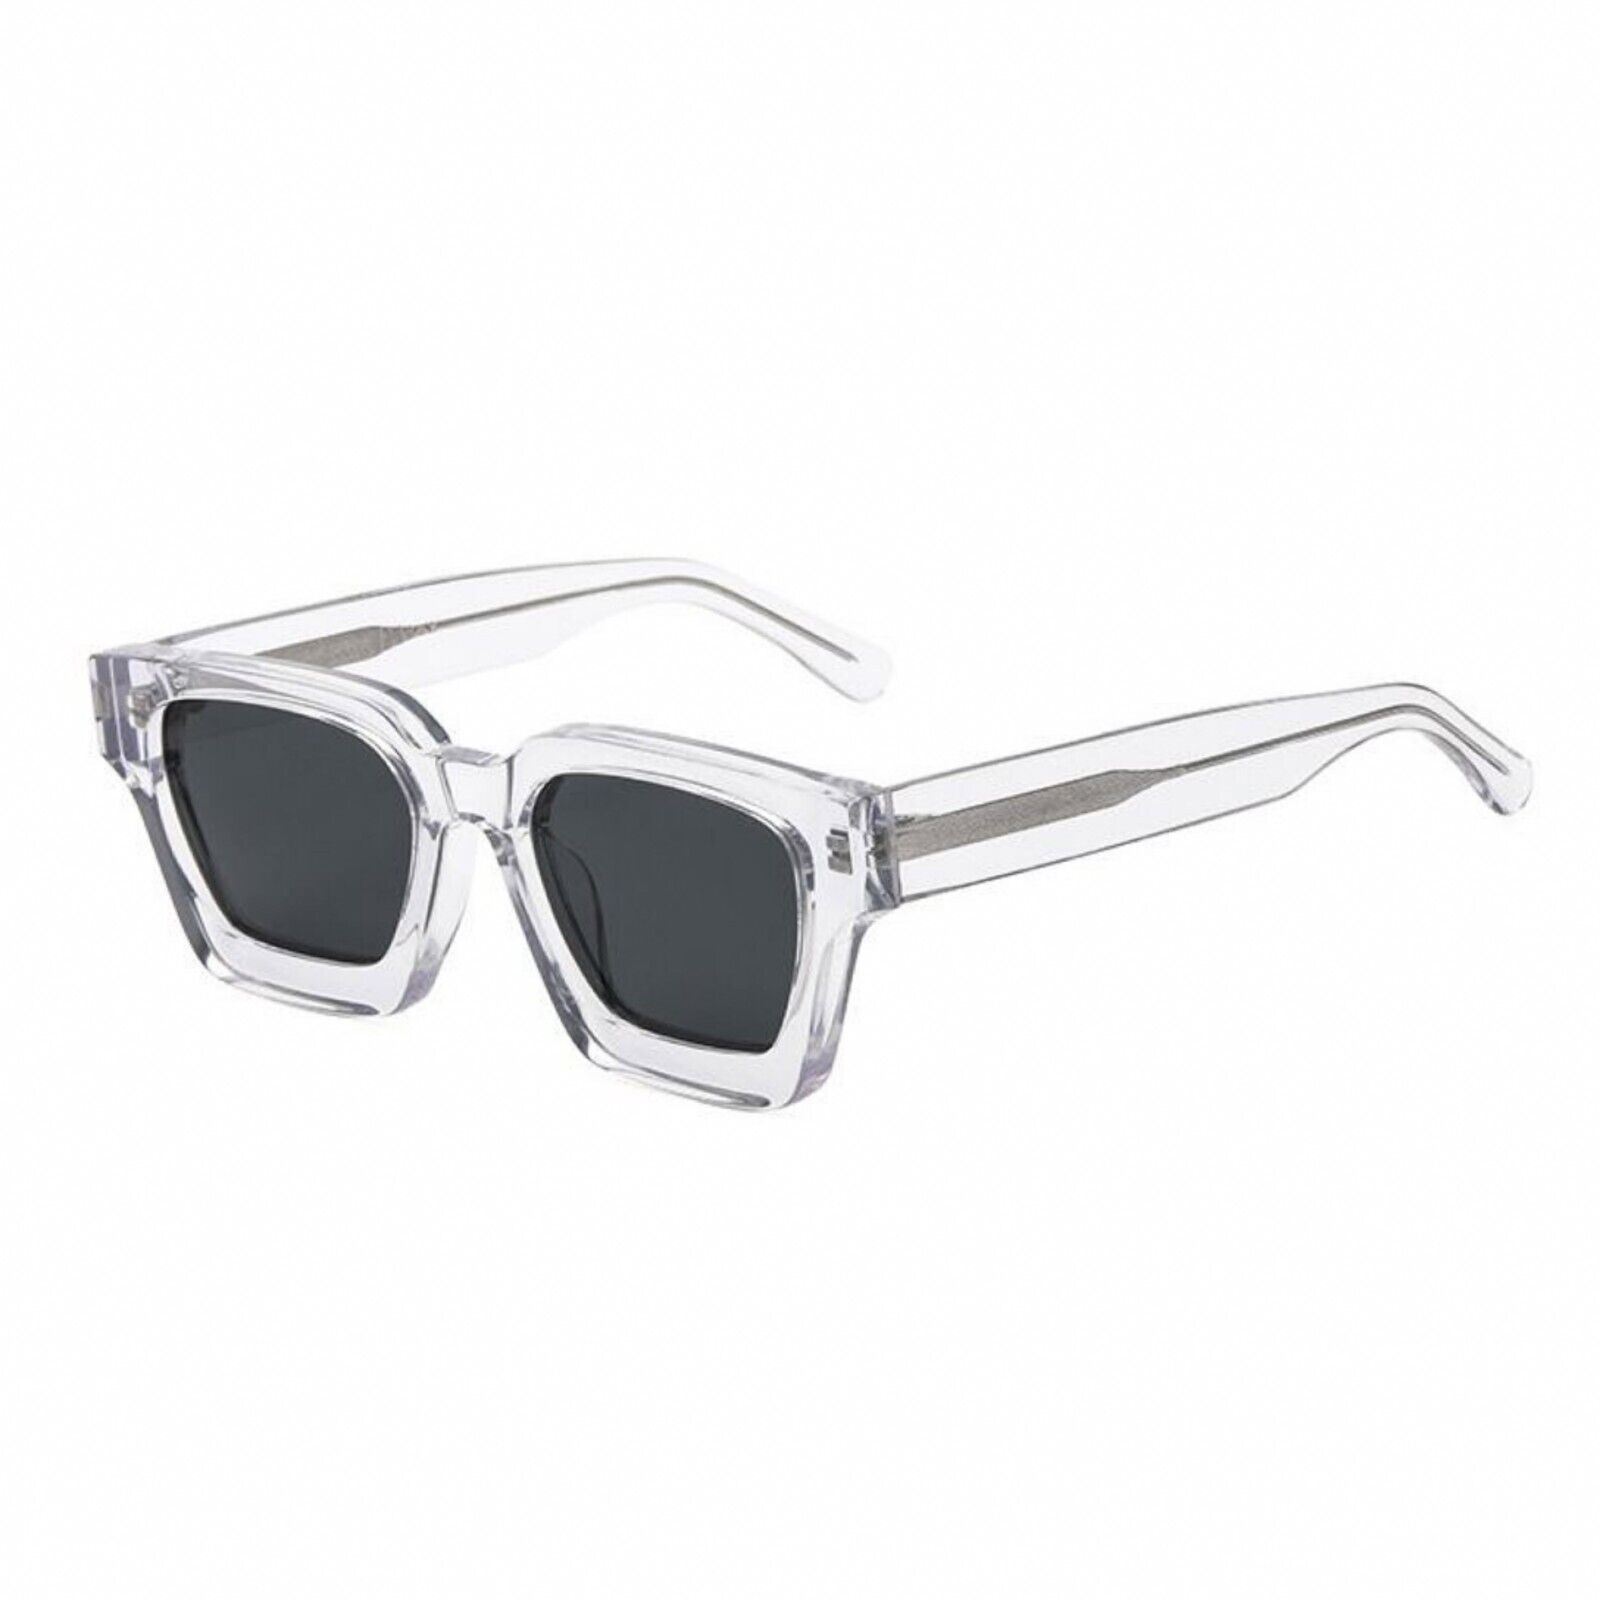 Large Clear Top Quality Acetate Black Tint Hip Hop Fashion Sunglasses